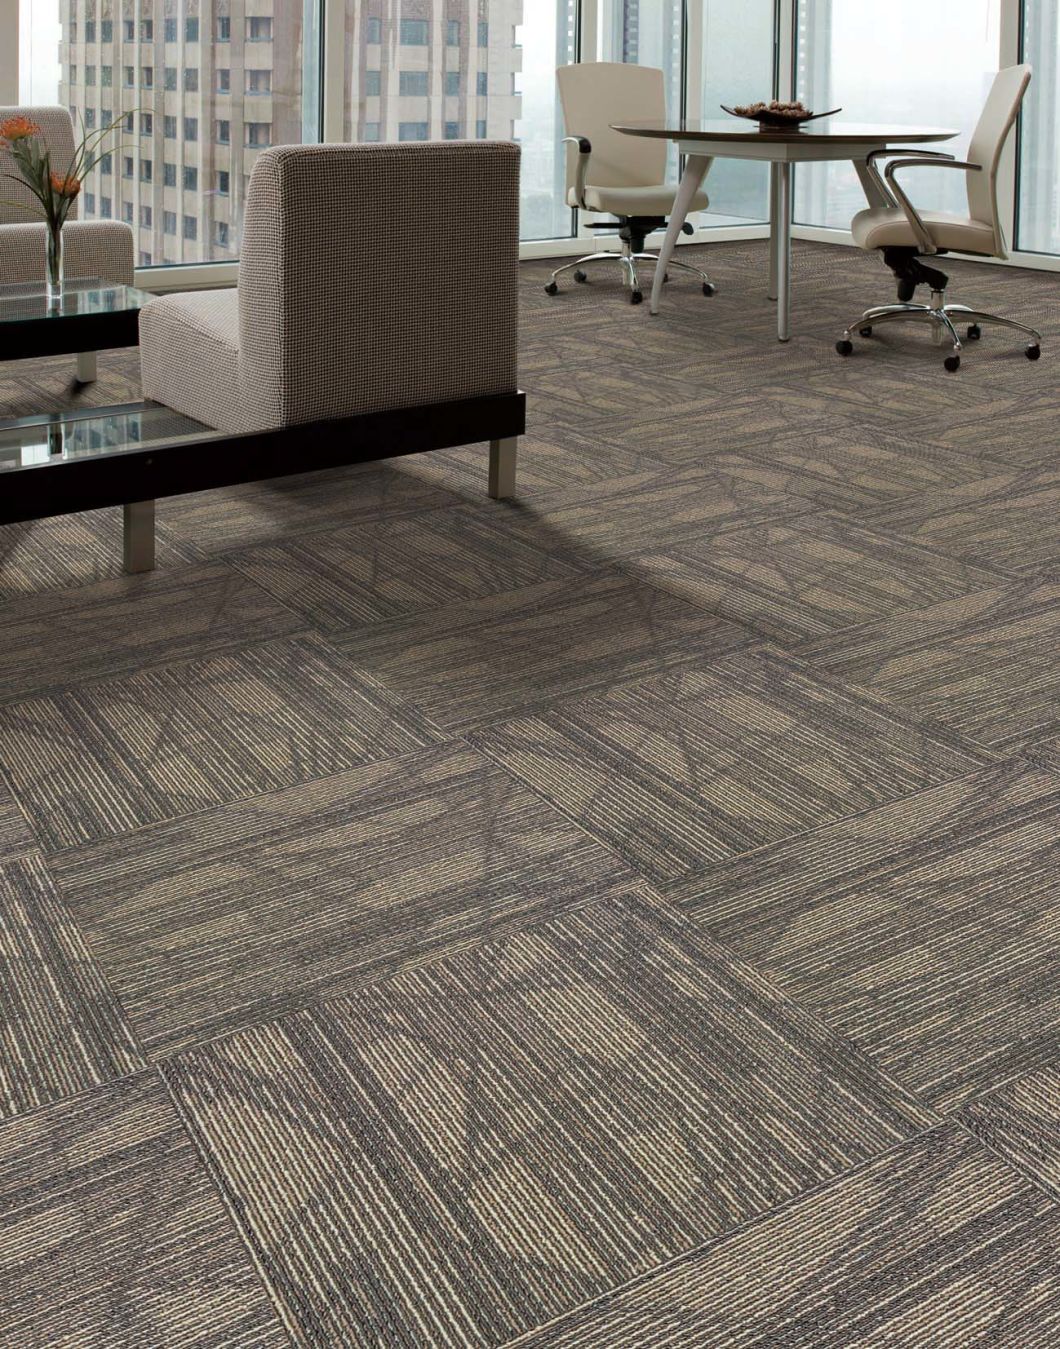 Building Decorative Materials PVC Backing Office Carpet